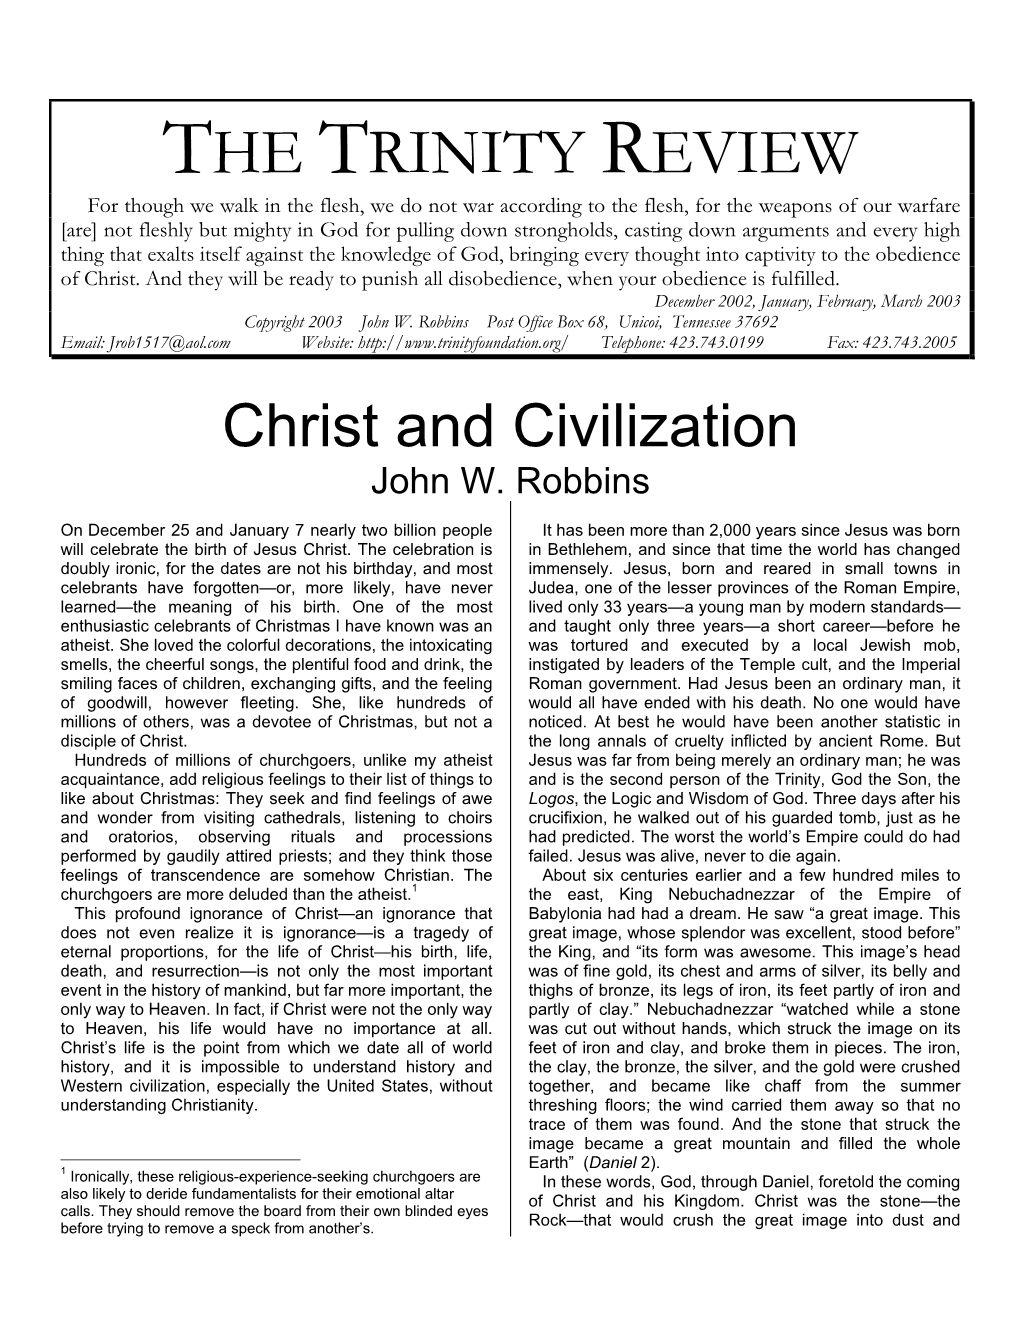 Christ and Civilization John W